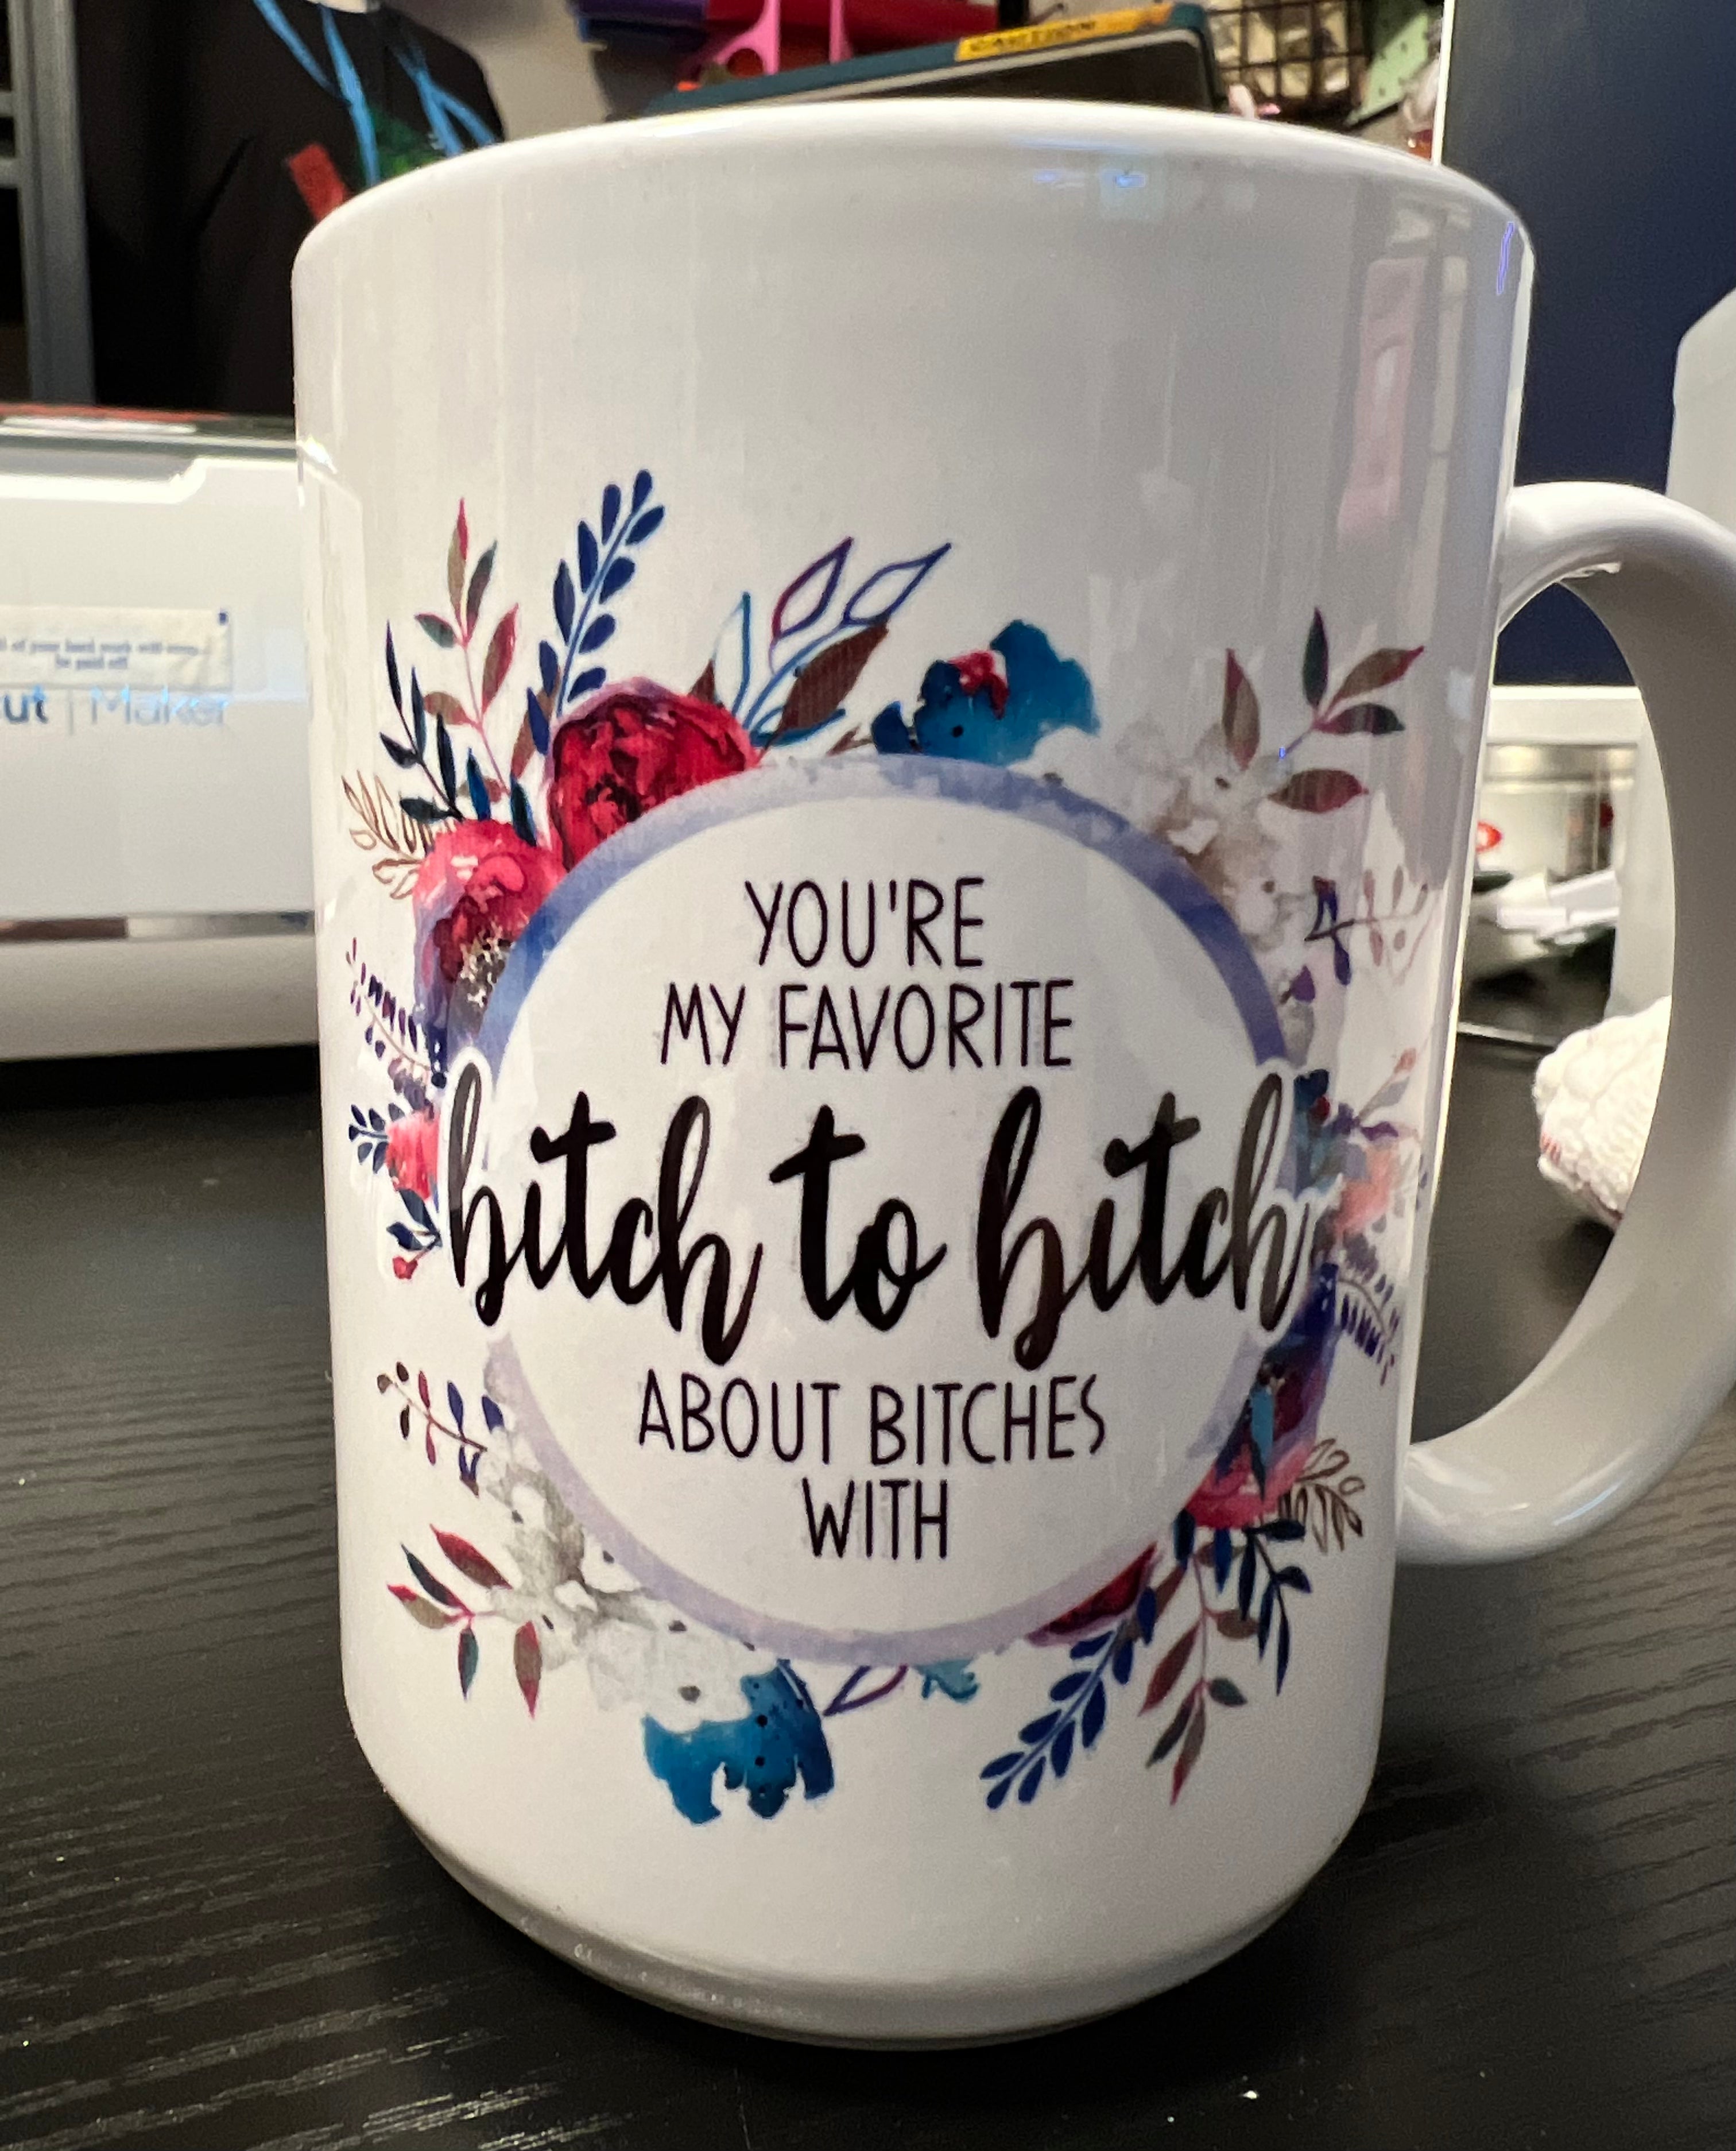 My favorite Bitch coffee mug